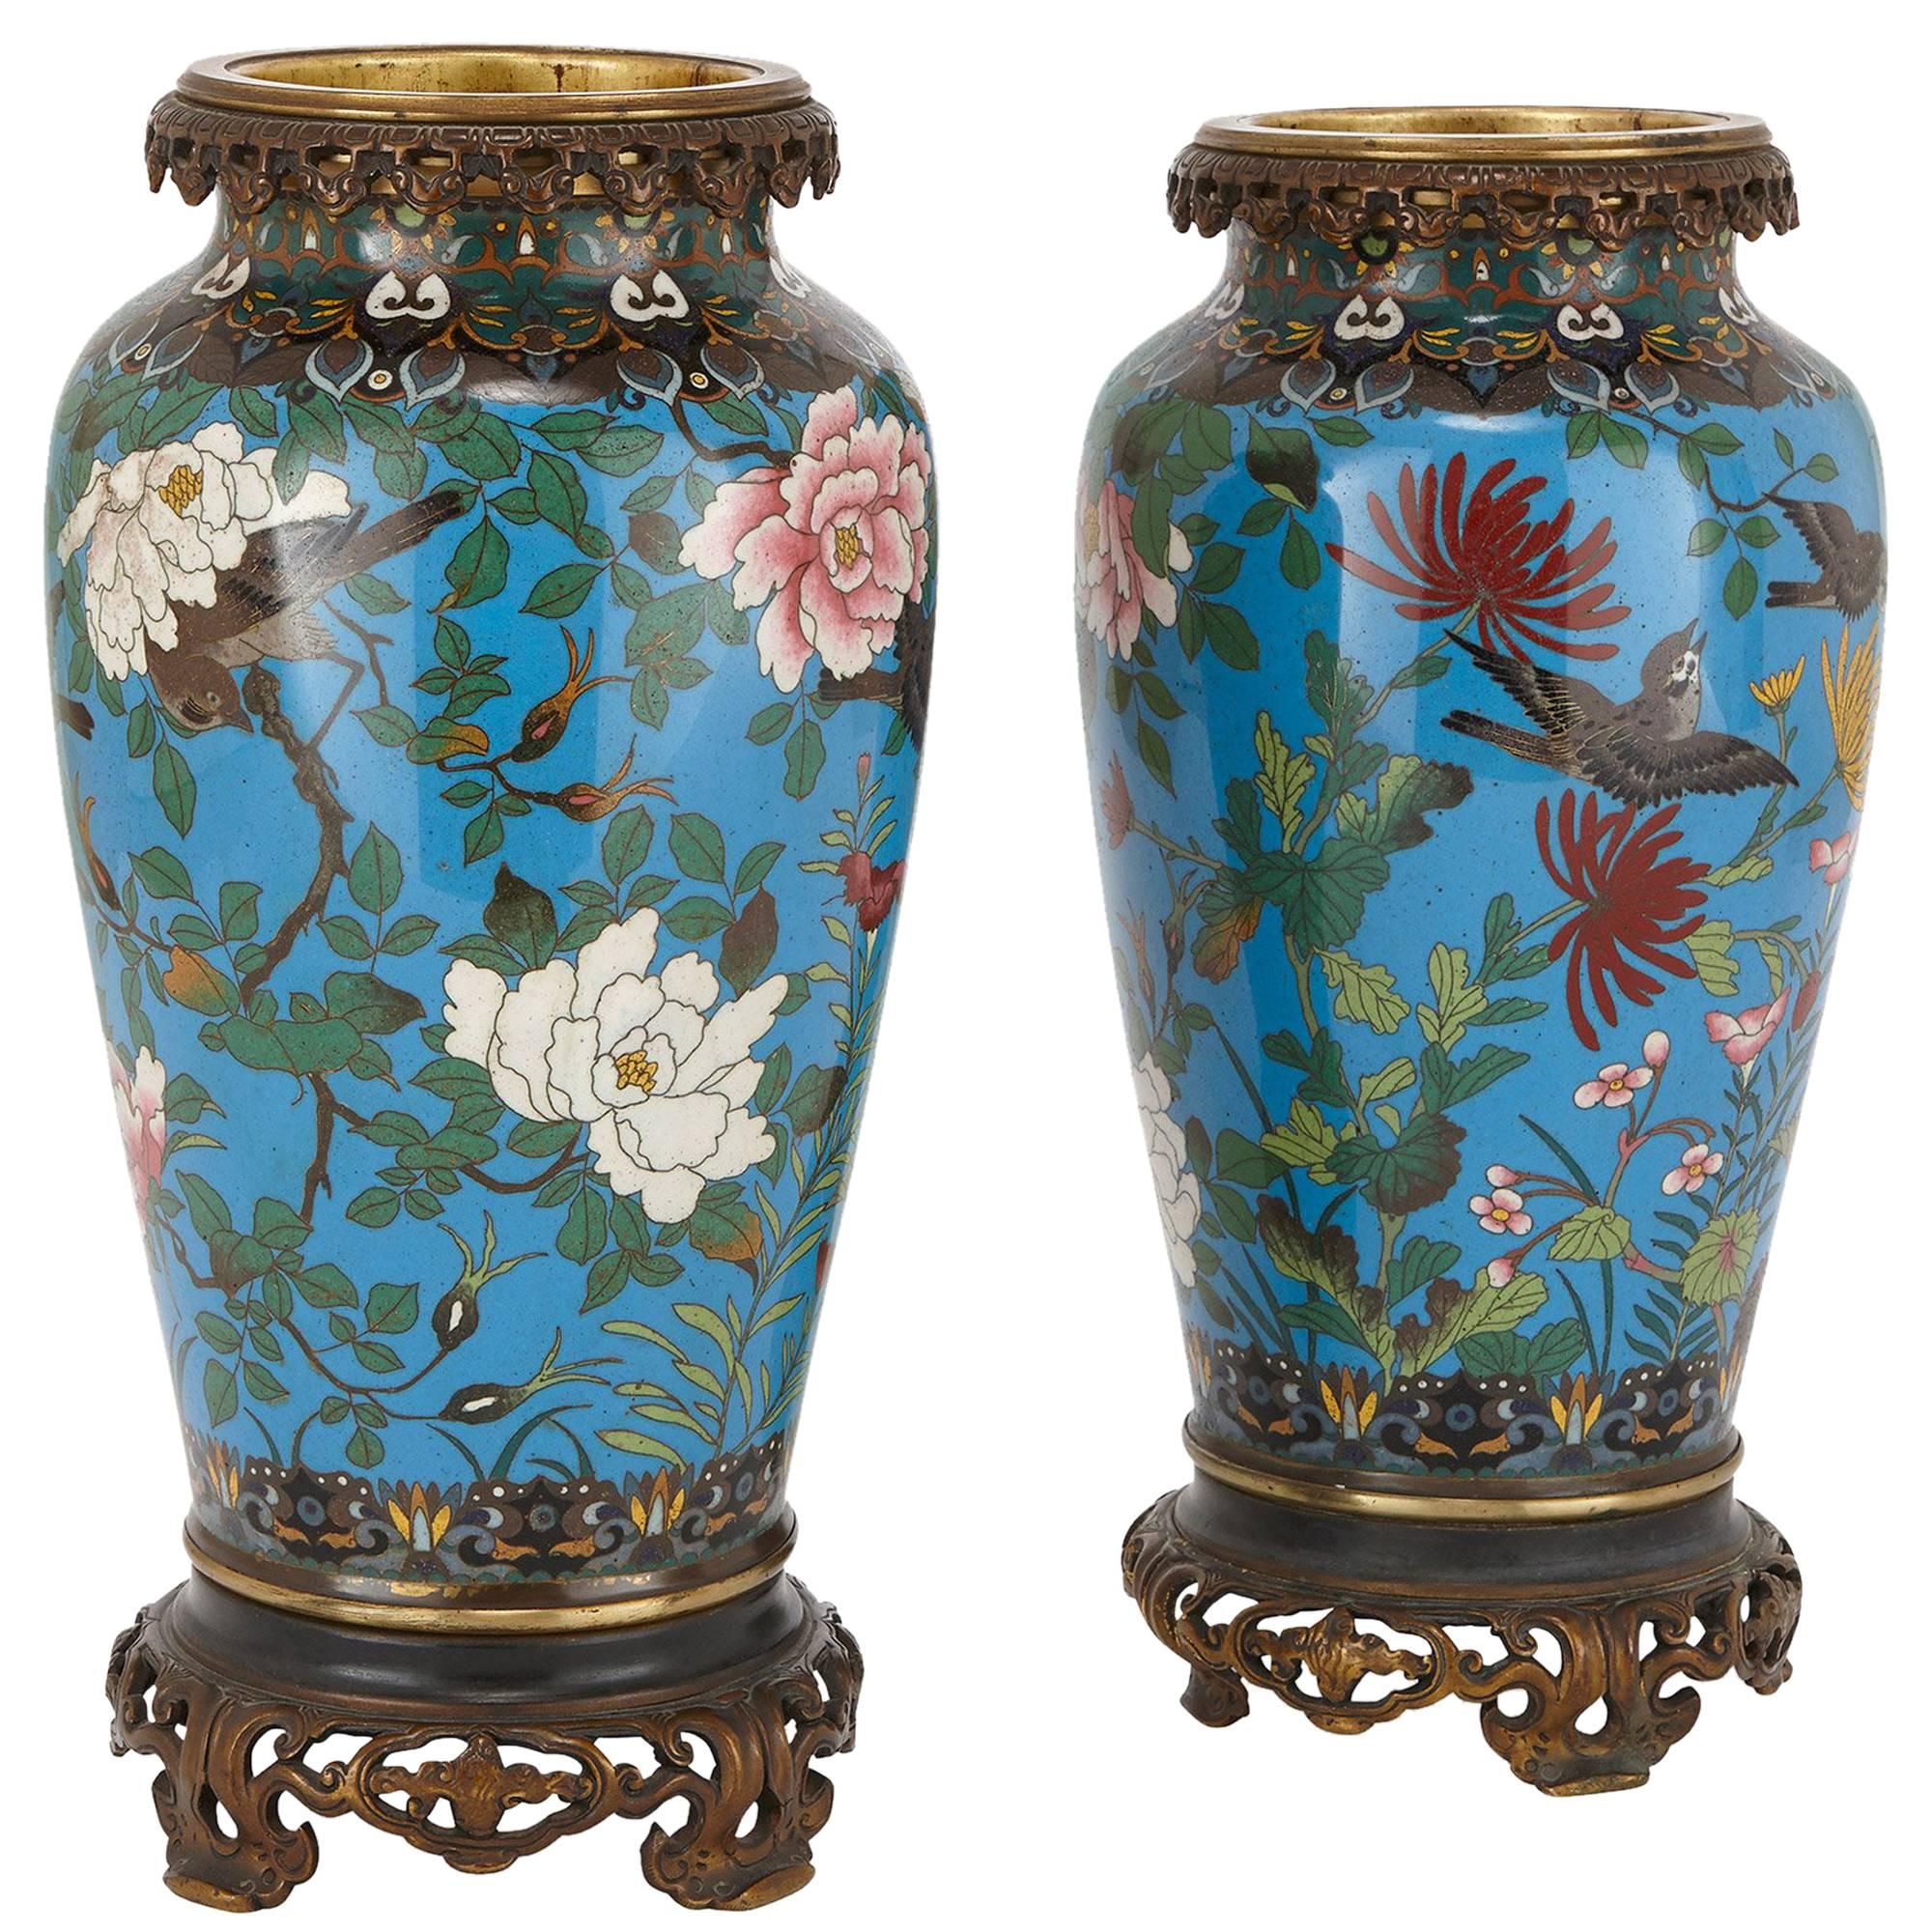 Pair of Antique Japanese Ormolu Mounted Cloisonné Enamel Vases